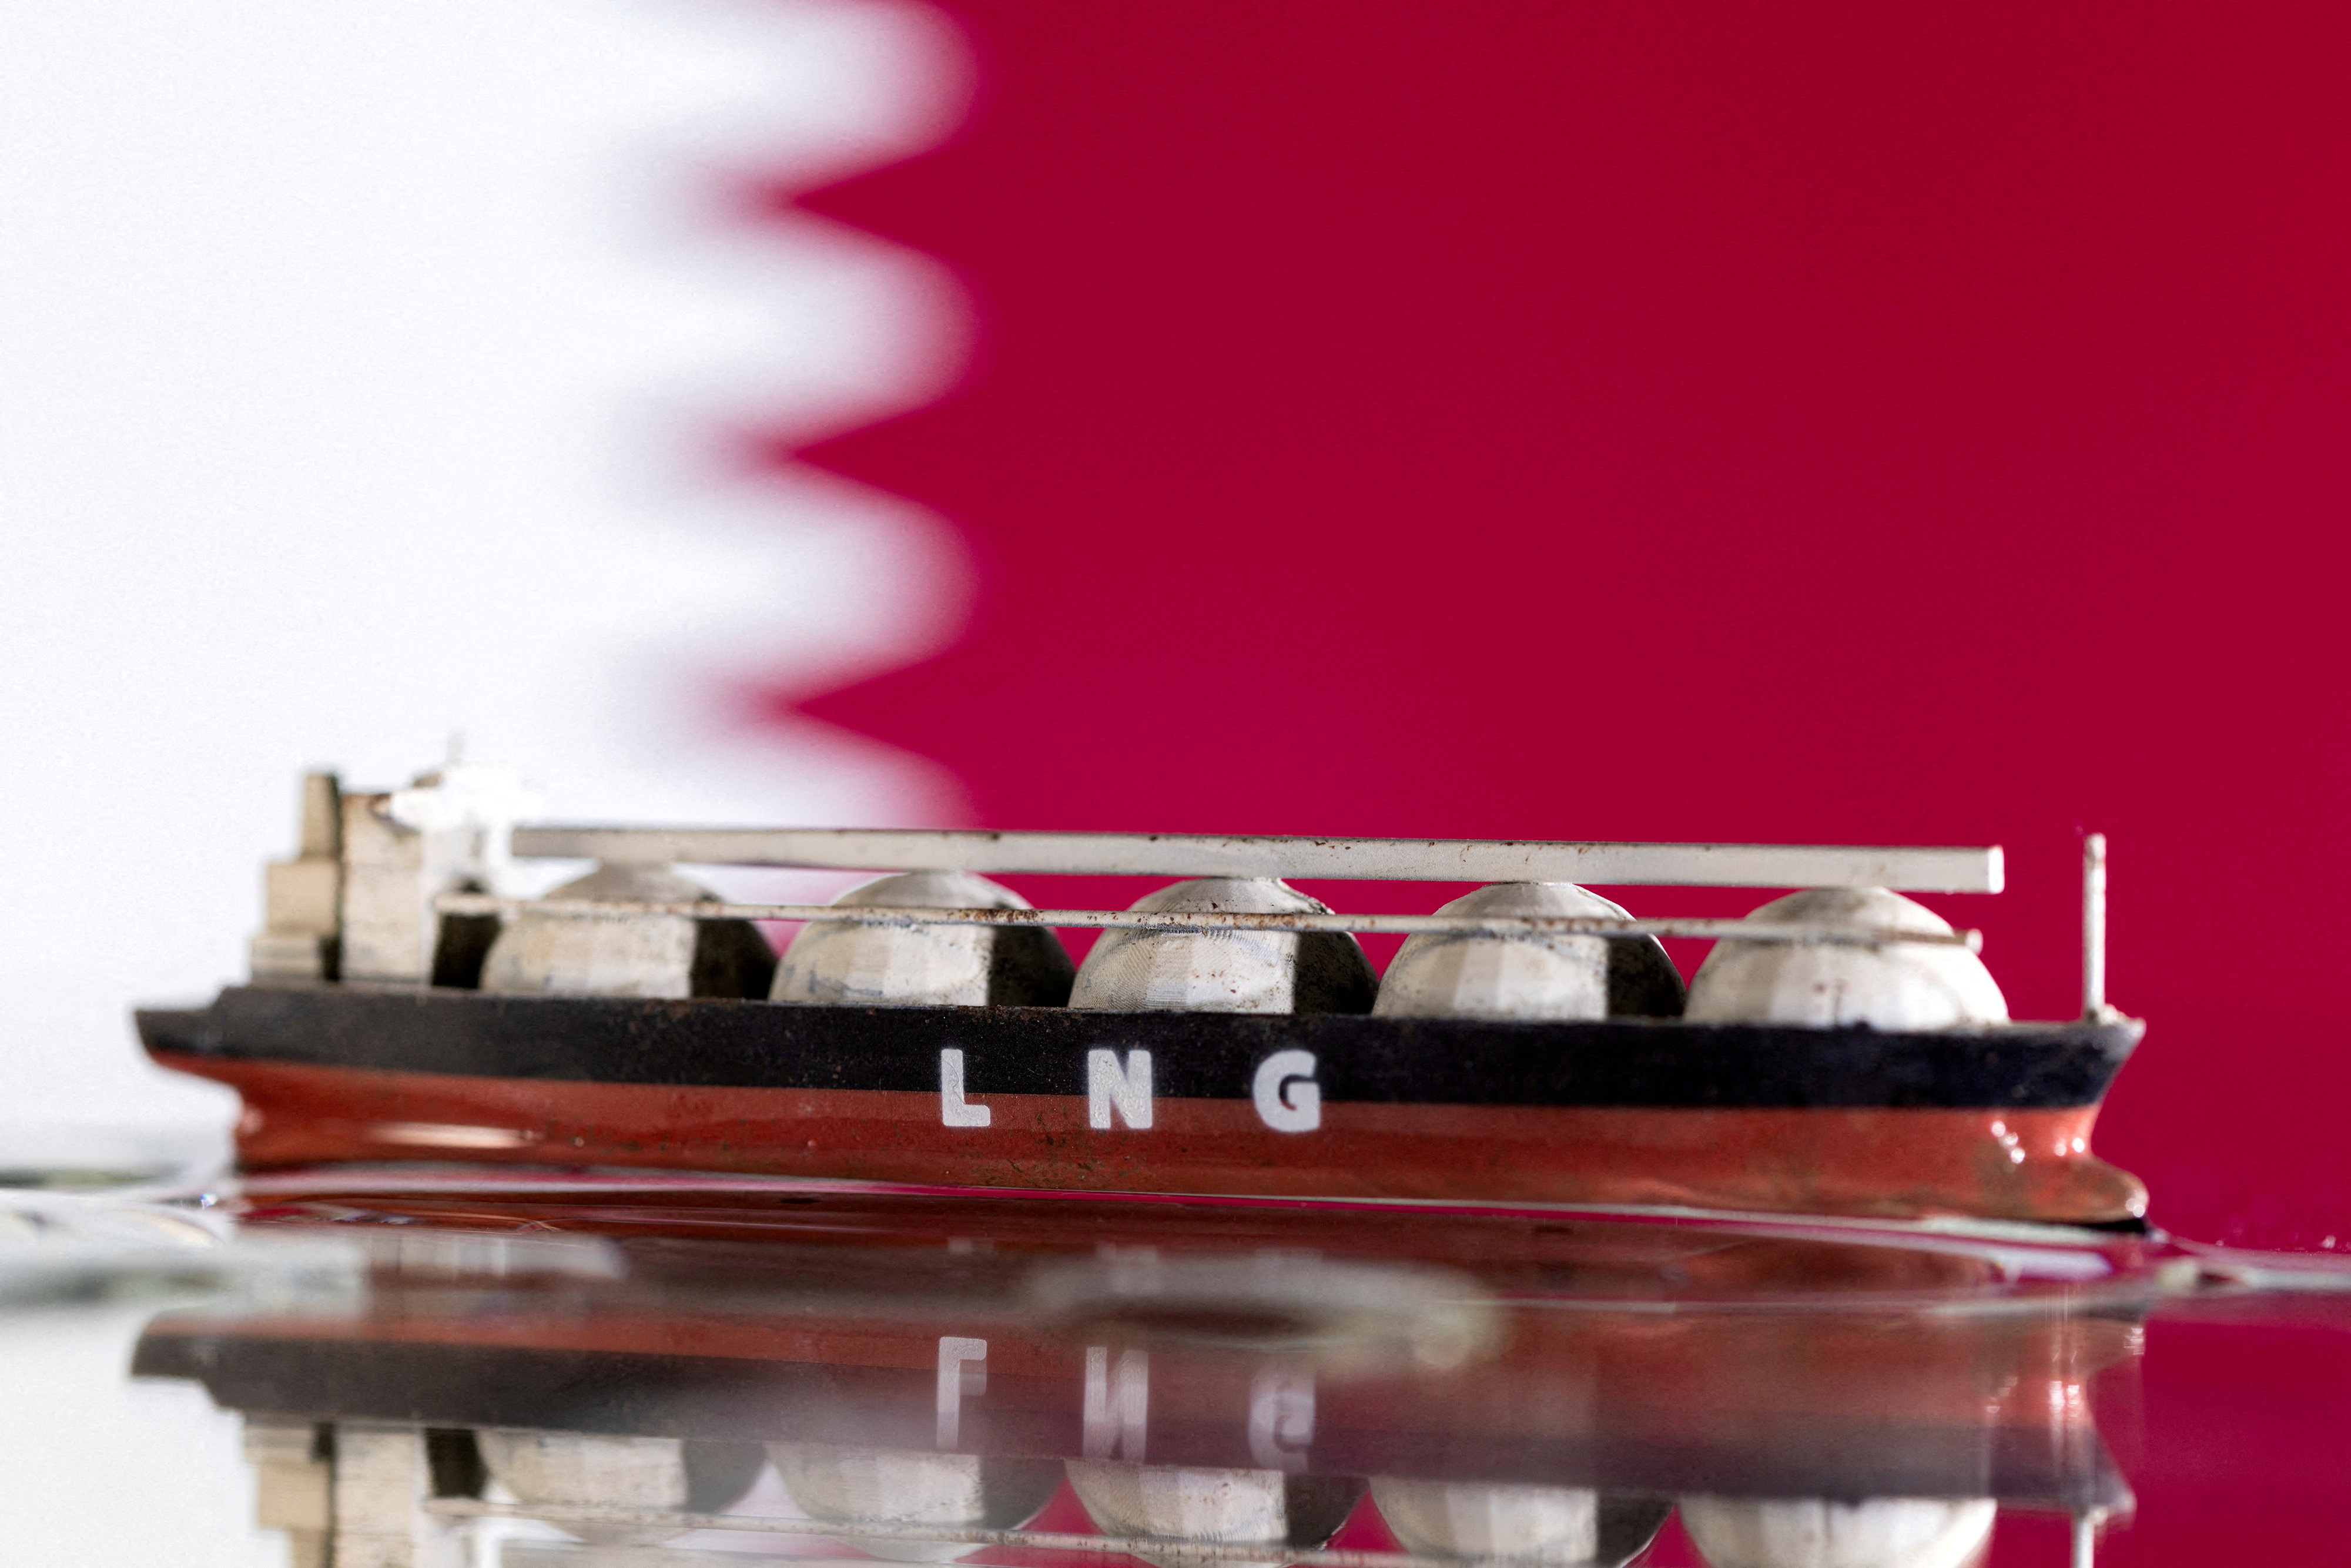 Illustration shows model of LNG tanker and Qatar's flag